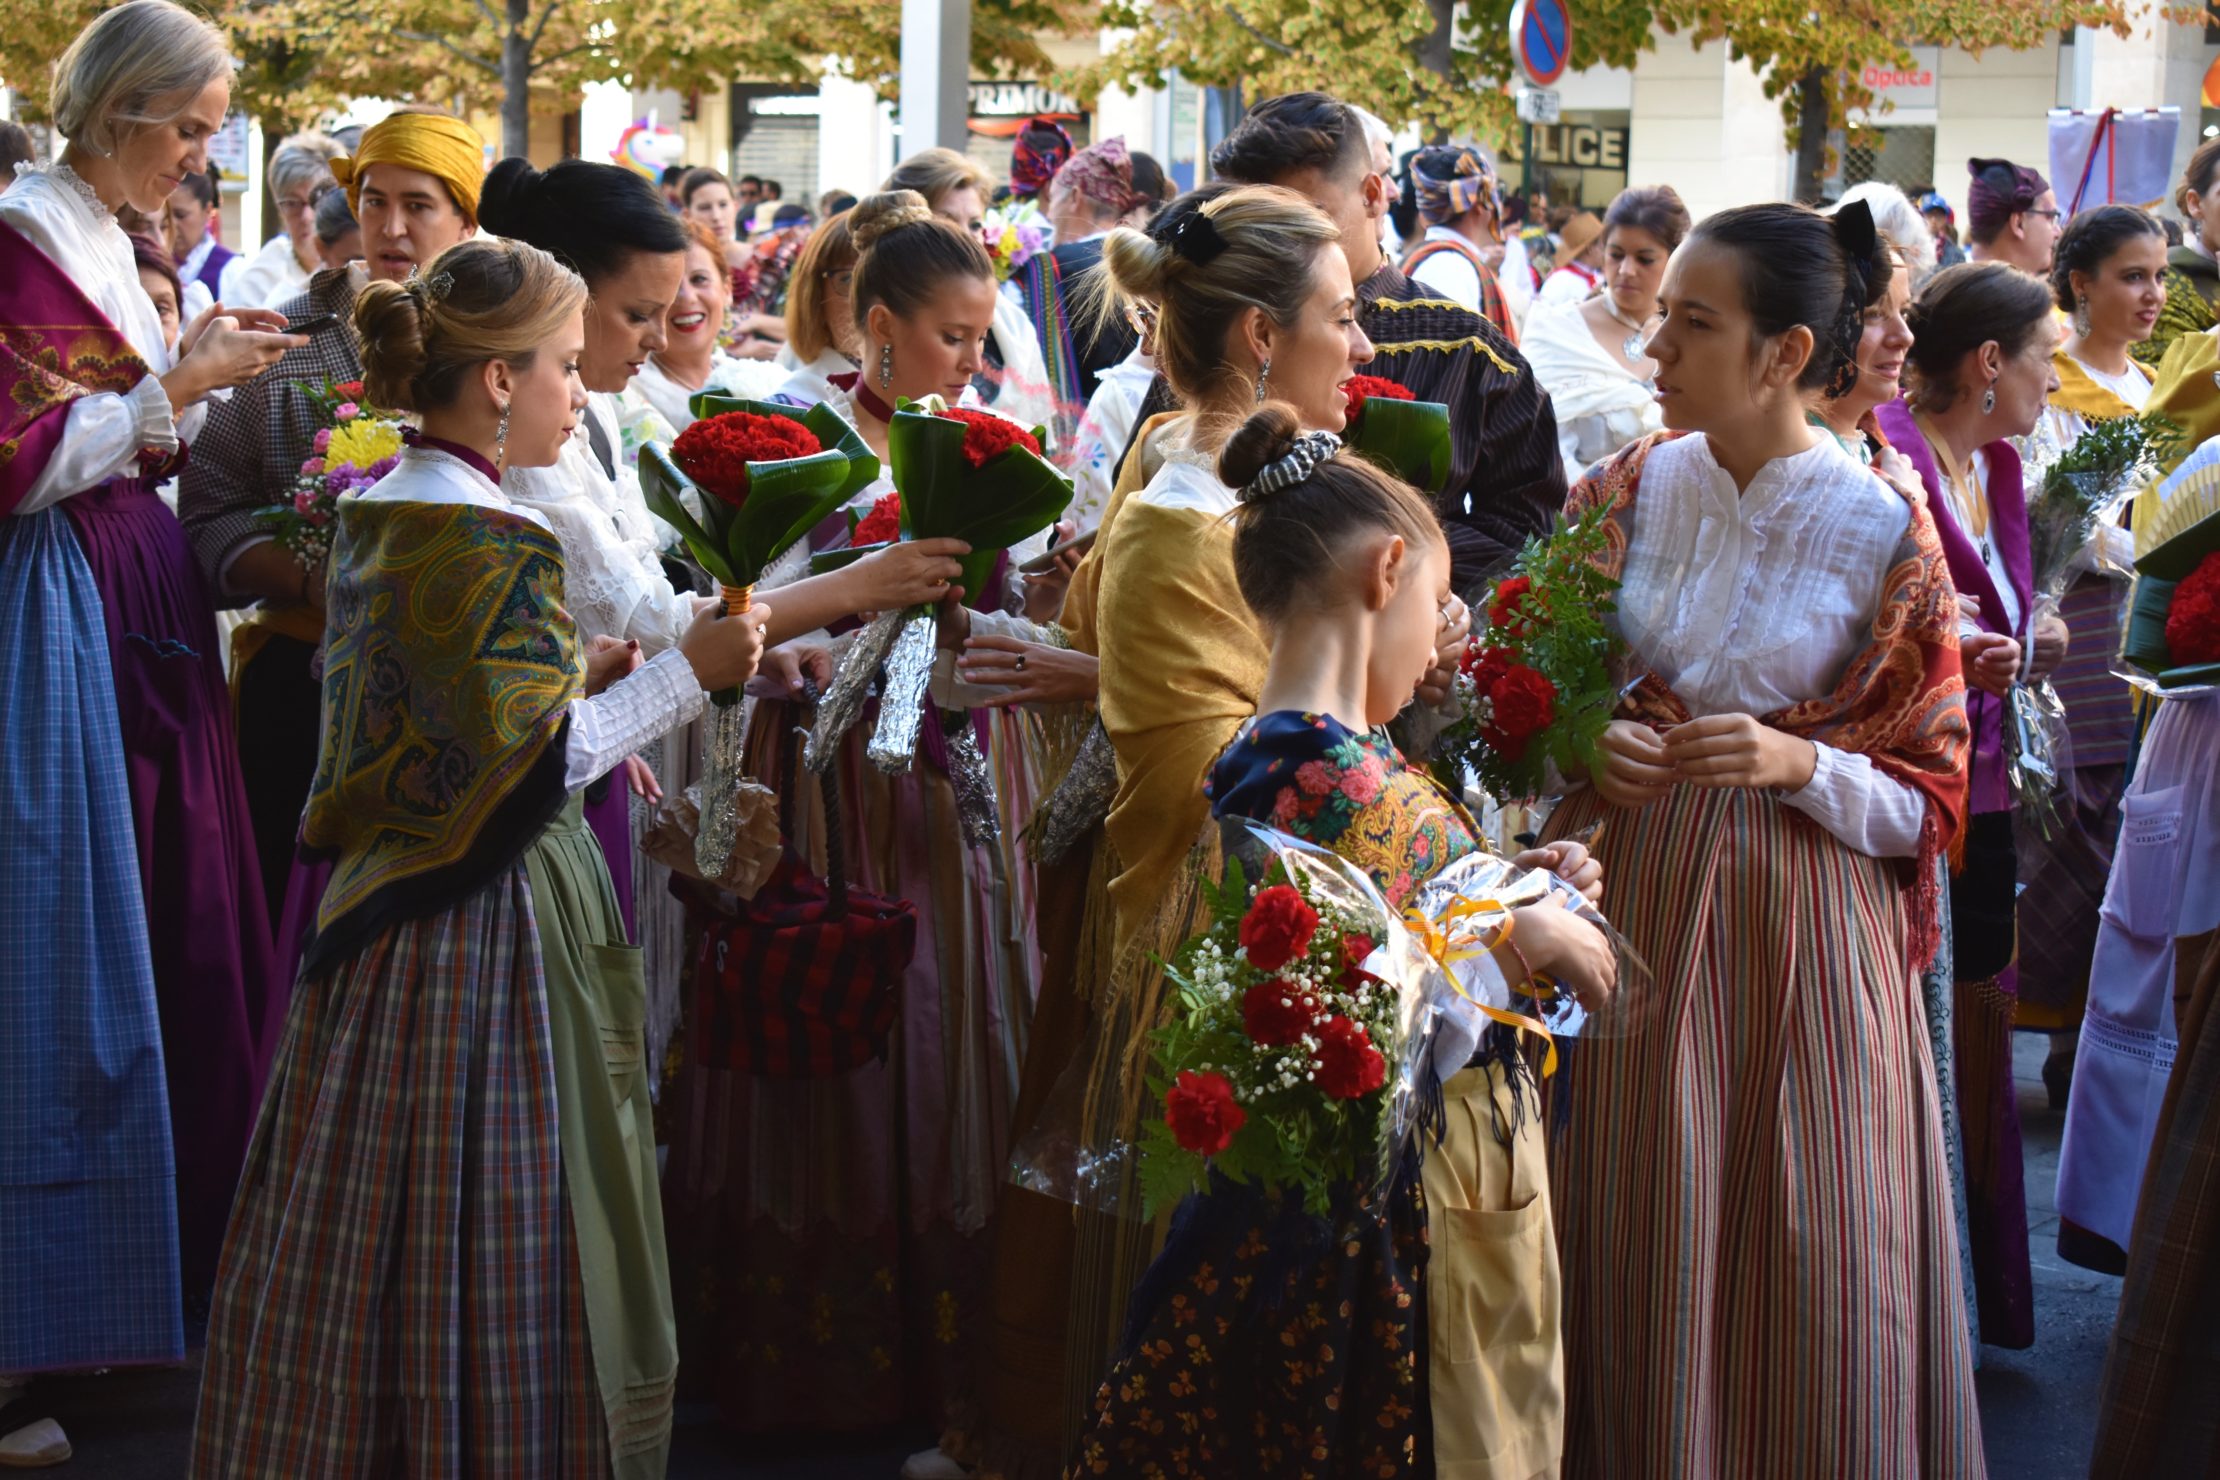 Pictoresque parade of the Flower Offering during Fiestas del Pilar in Zaragoza (4)